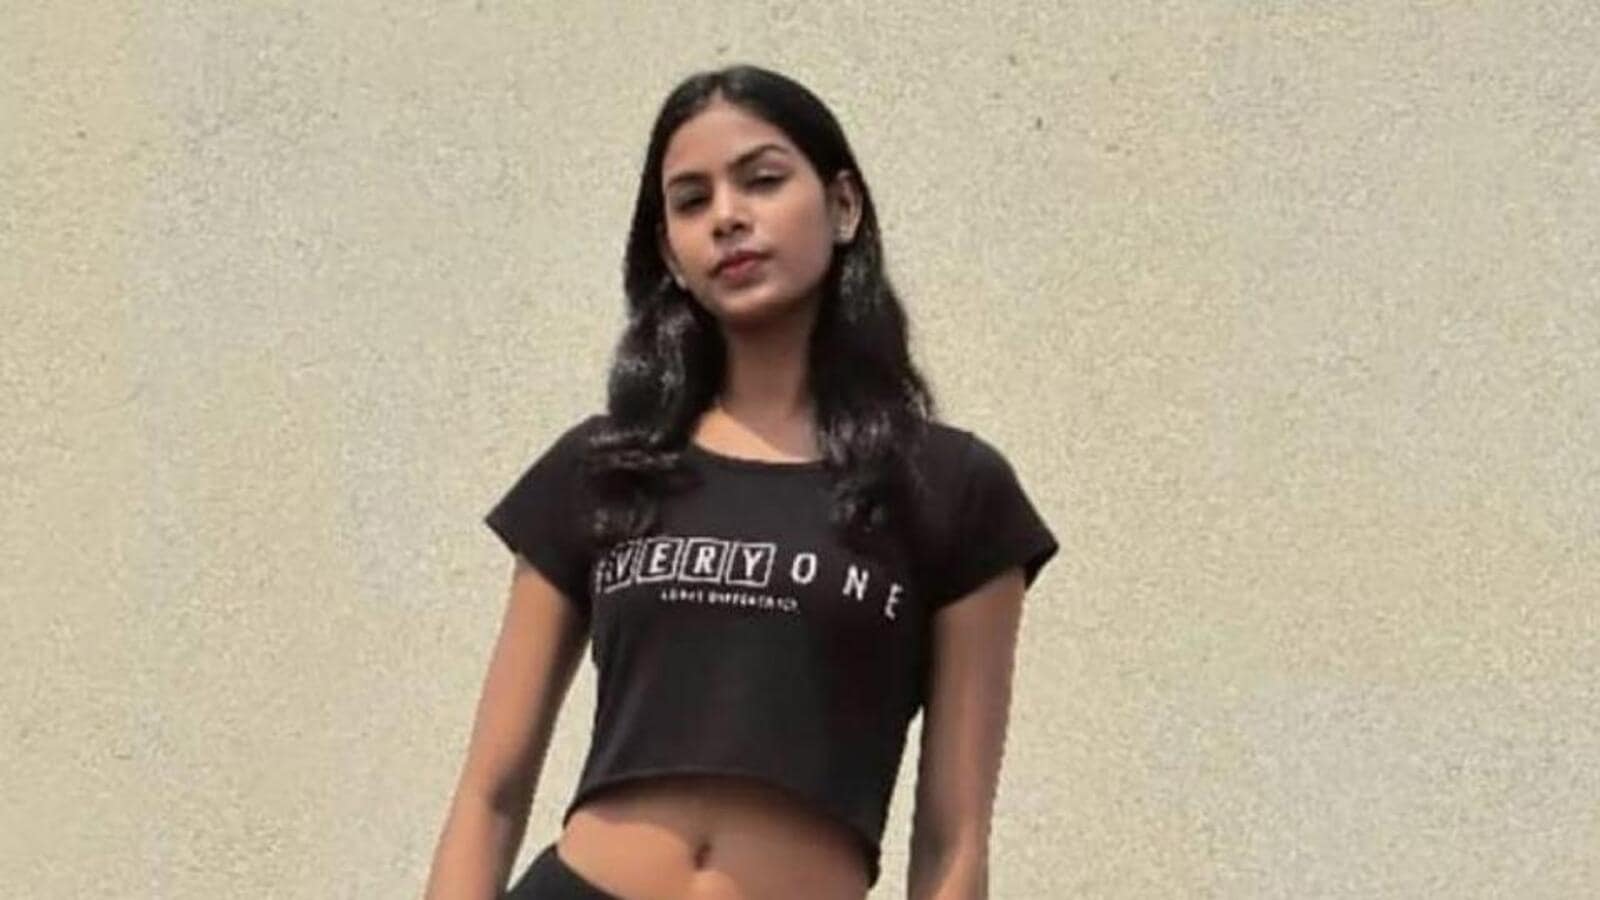 Odisha Girl Porn Videos Hd Free Watch - 18-year-old Odisha girl Sriya Lenka becomes first K-pop star from India -  Hindustan Times